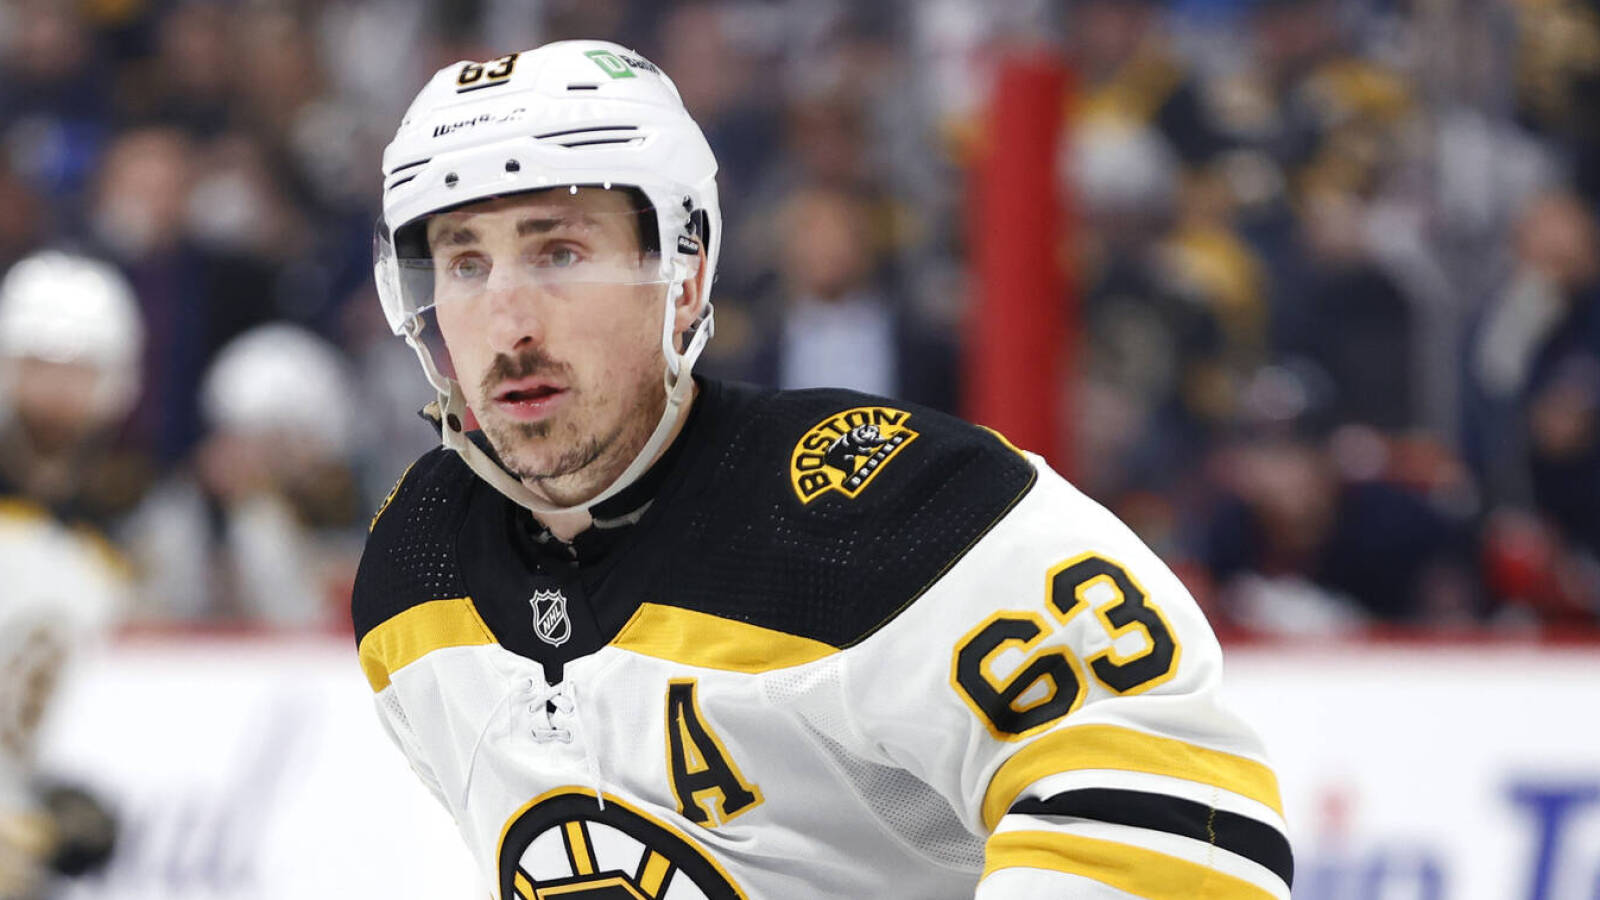 NHL Trade Rumors - Congratulations to Boston Bruins forward Brad